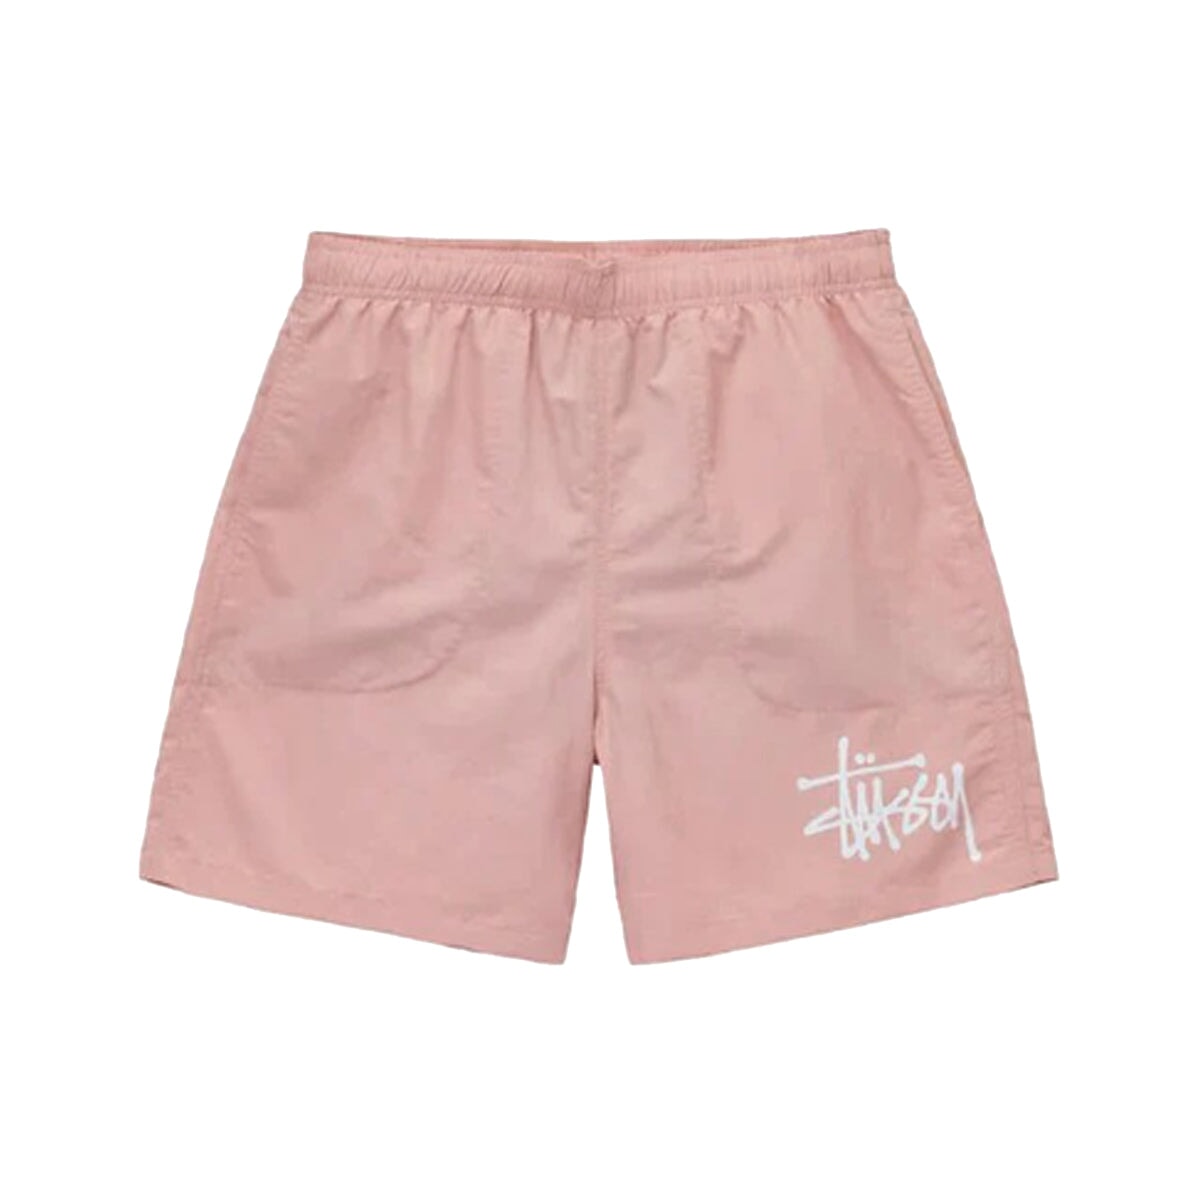 Stüssy Big Basic Short - Pink Shorts Stüssy 